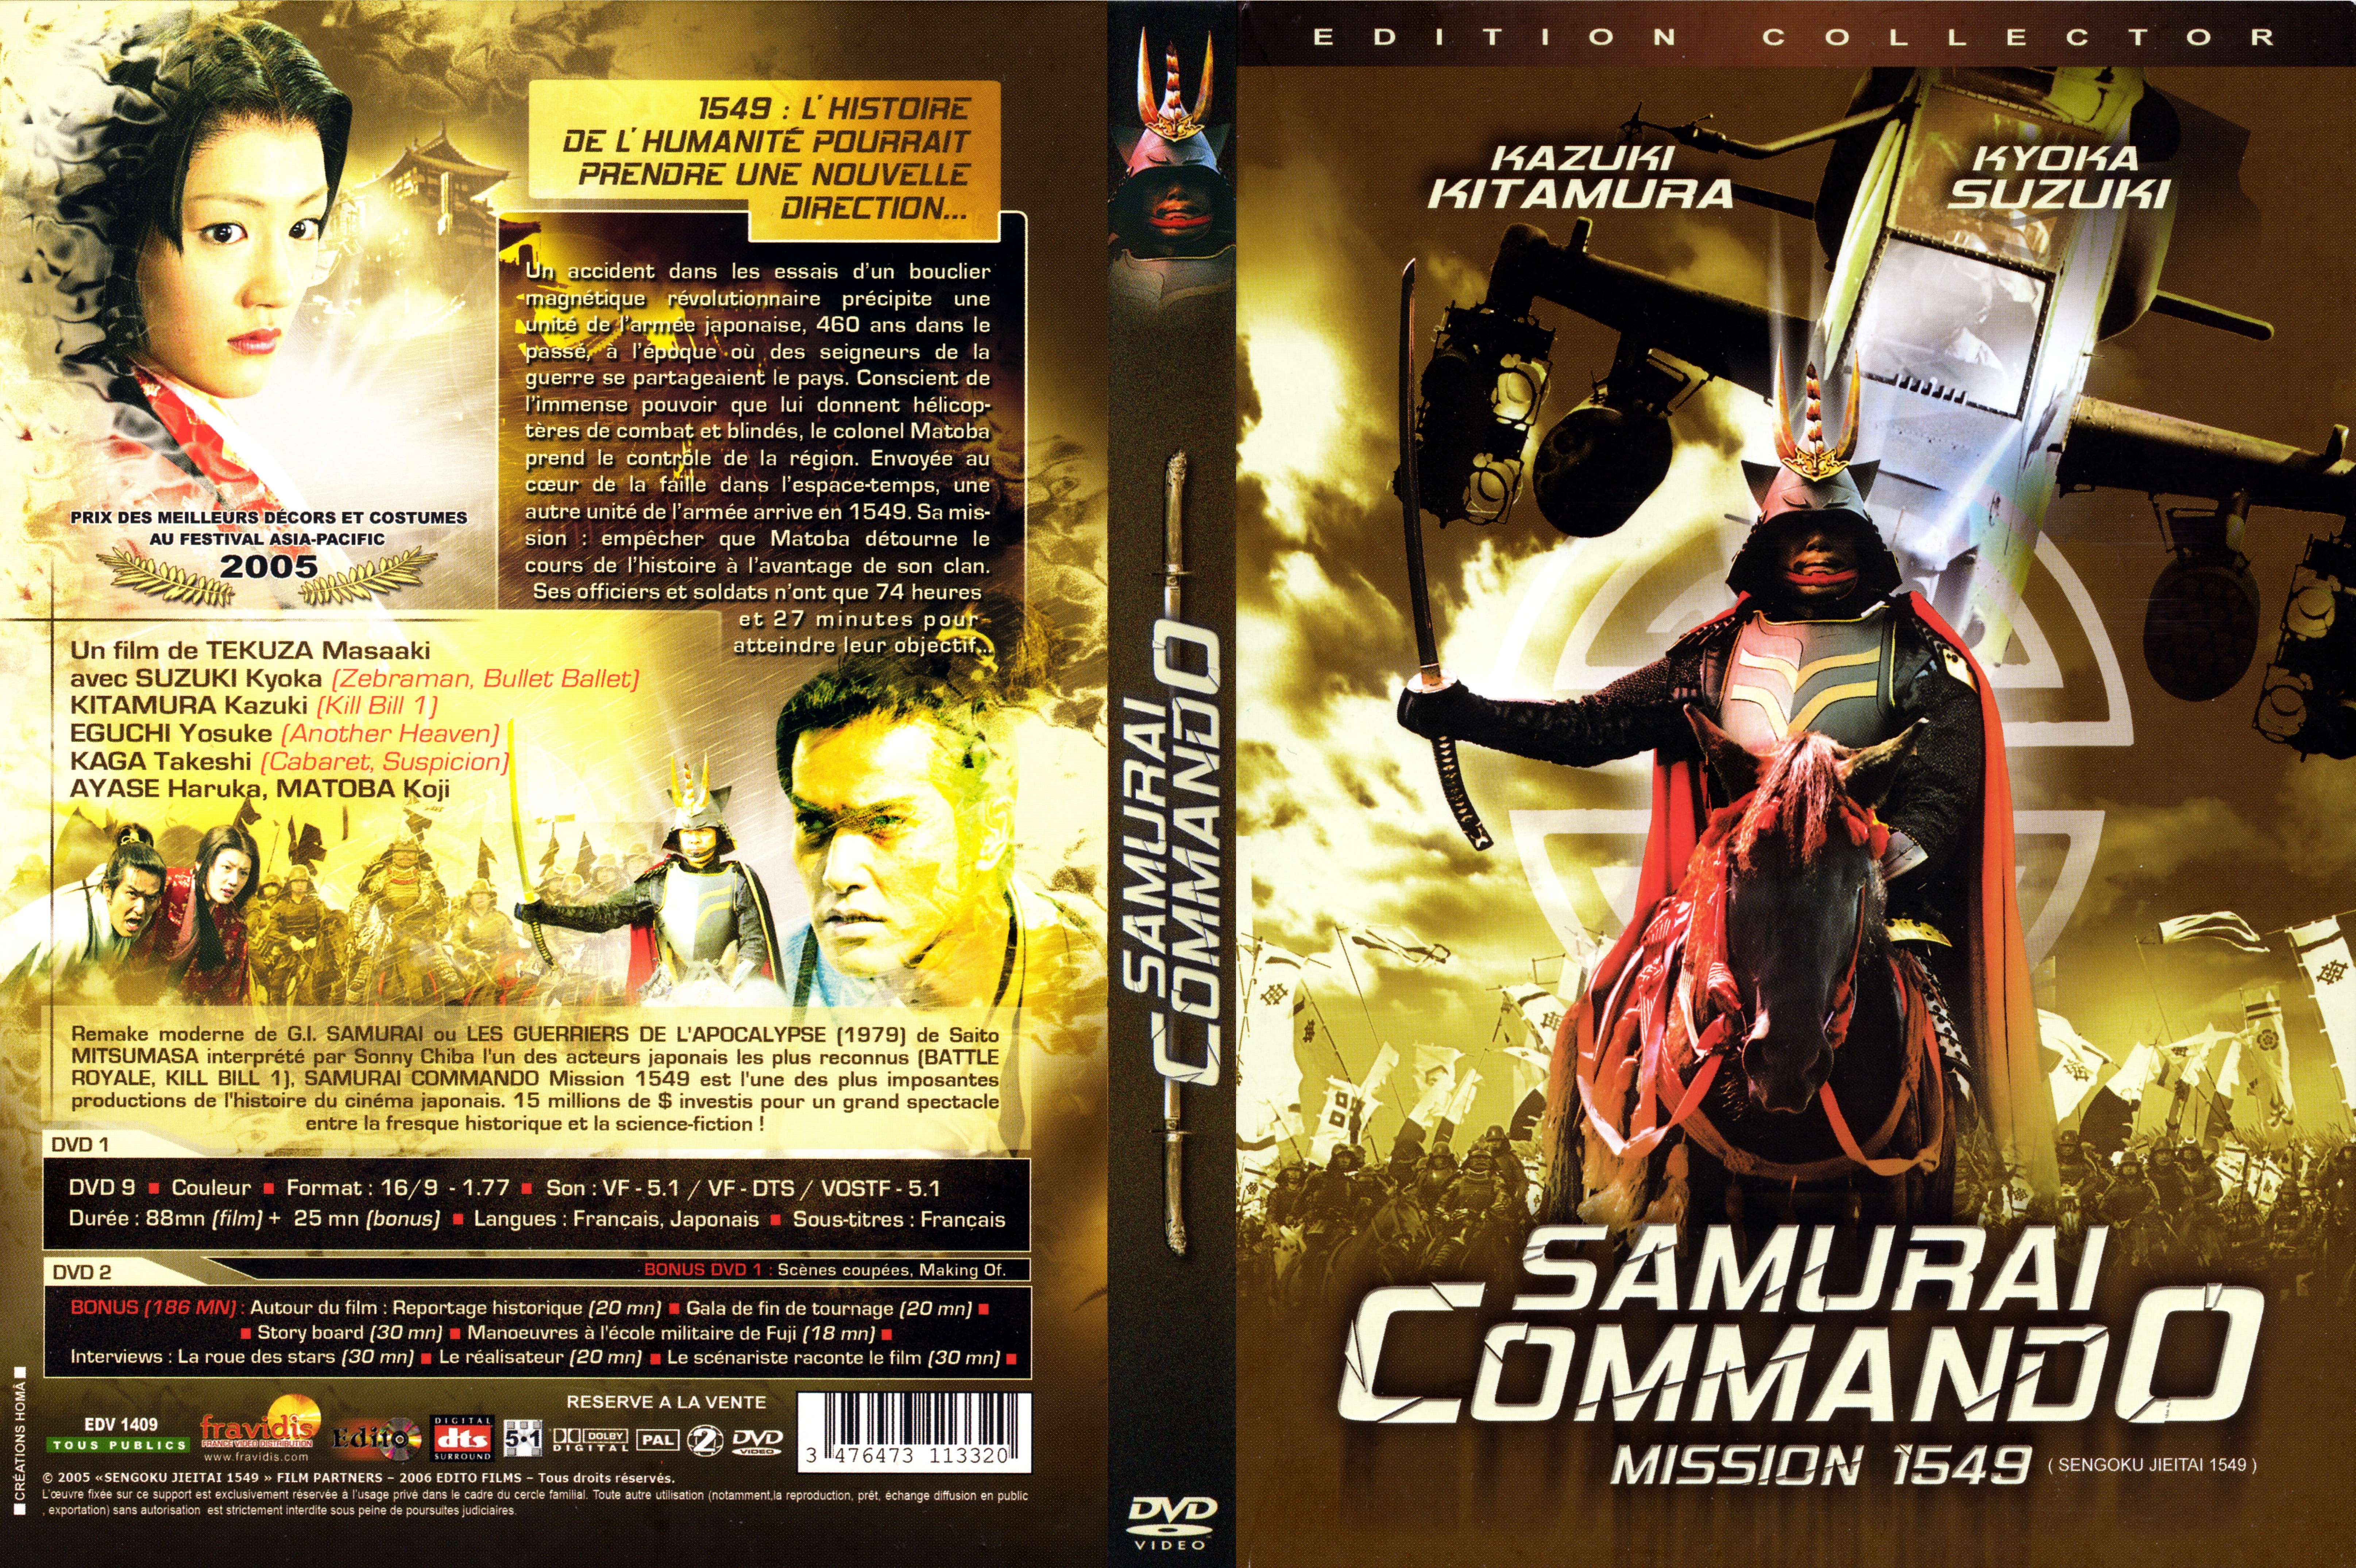 Jaquette DVD Samurai commando v3